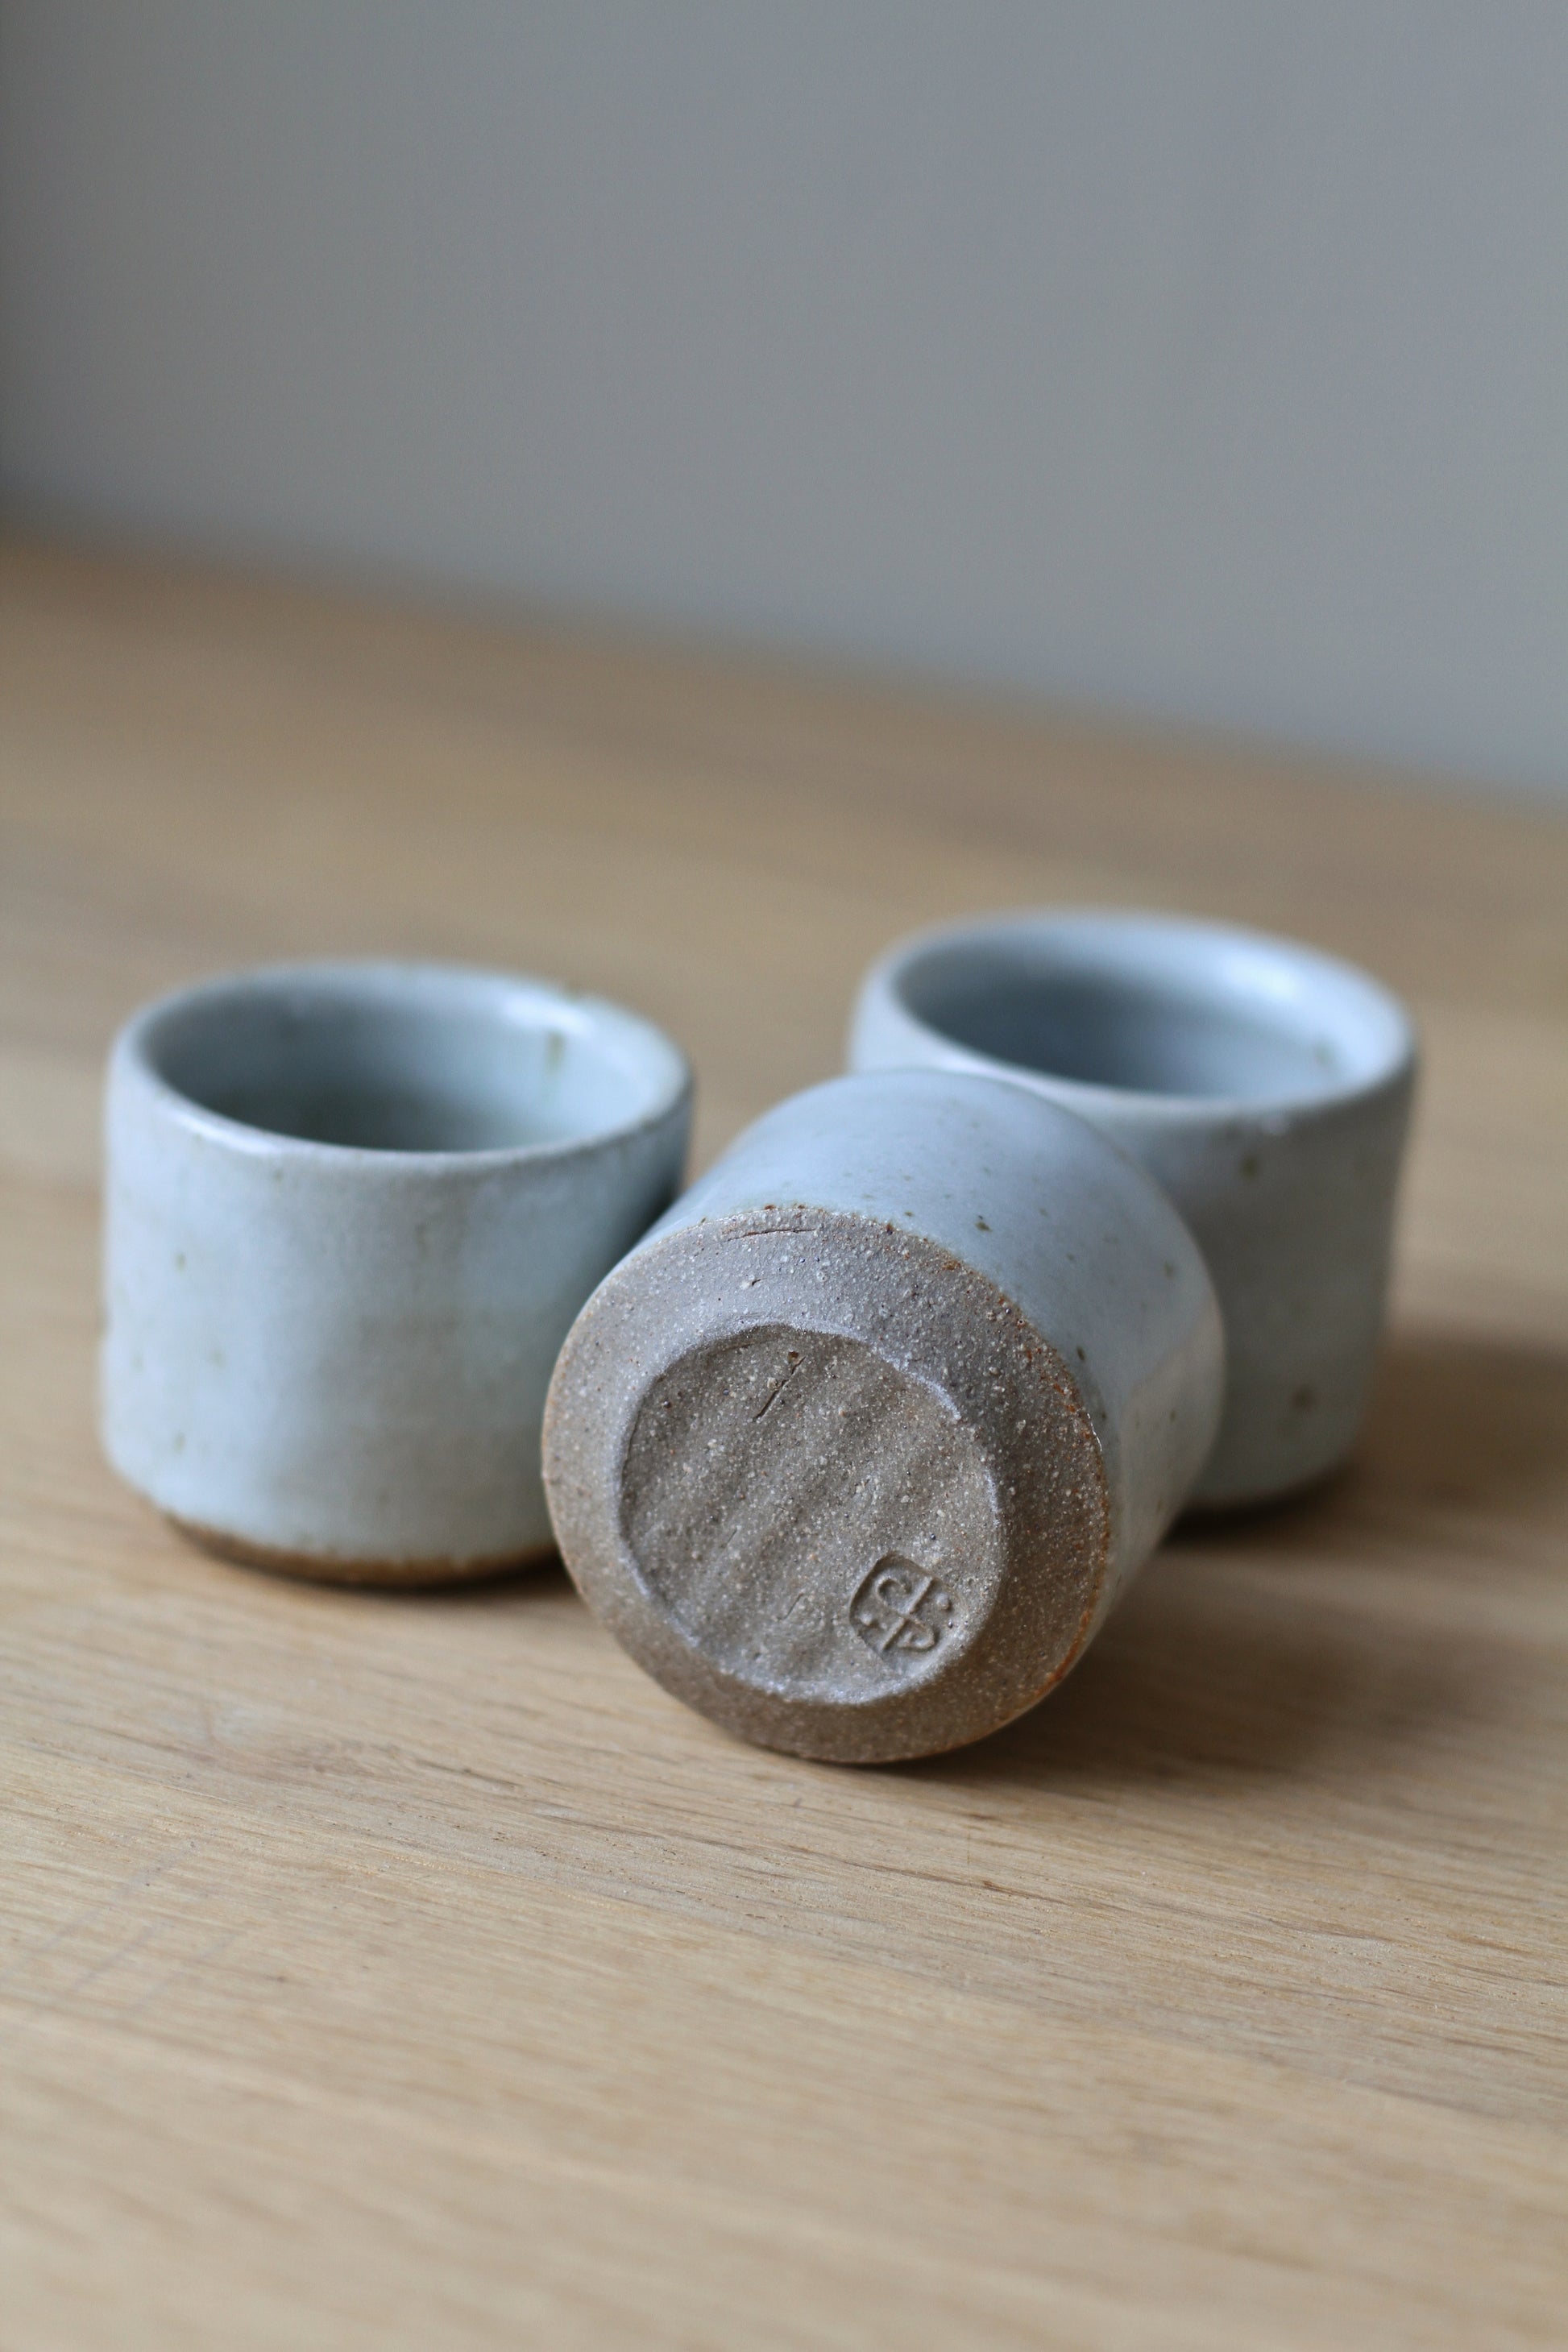 Standard Clay - The Ceramic Shop